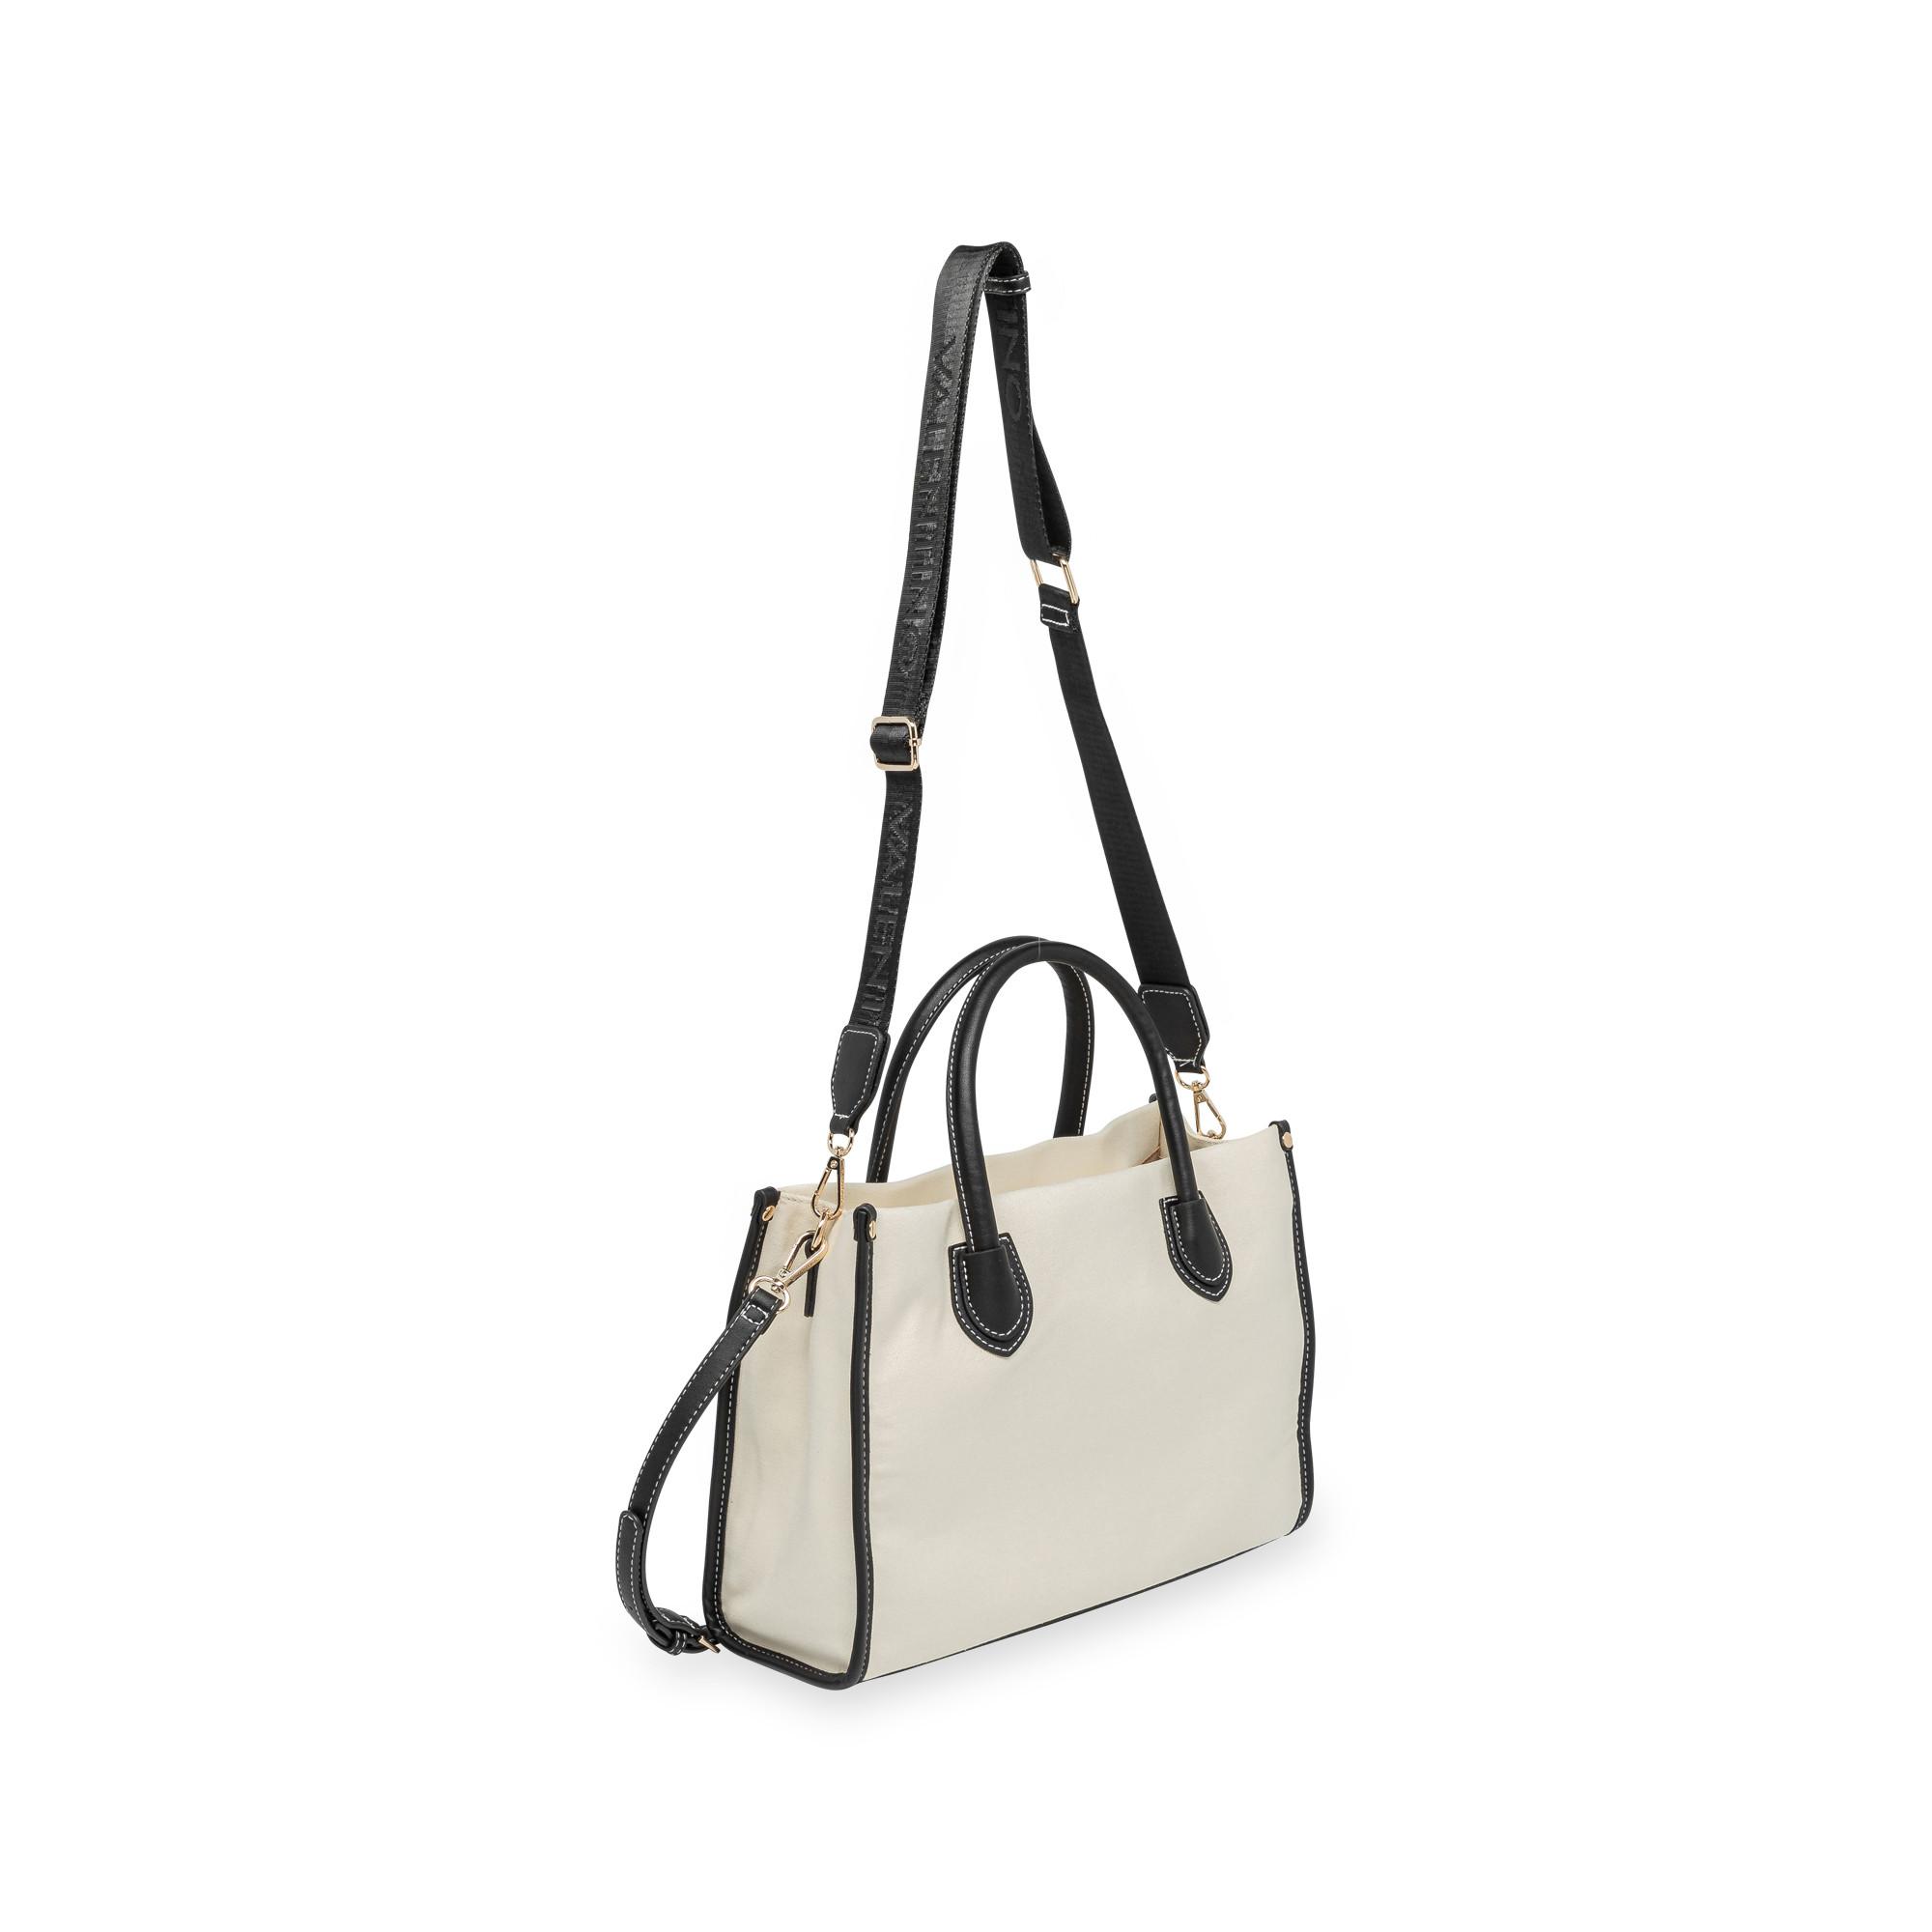 Valentino Handbags Leith Re Tote-Bag 